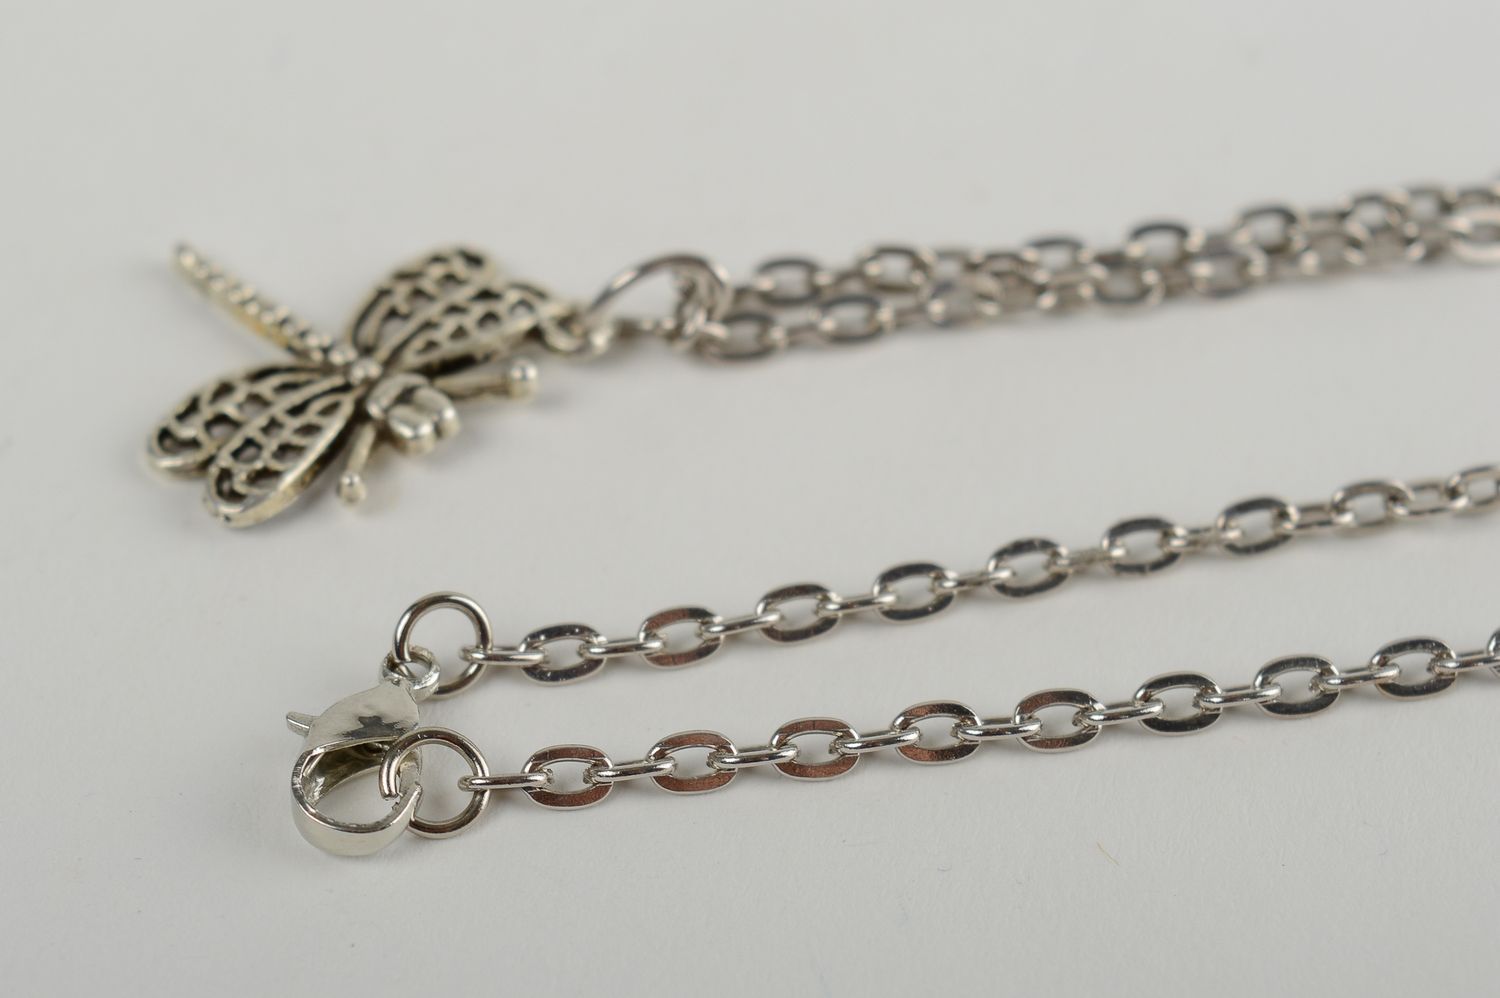 Handmade vintage pendant of chain metal pendant designer accessories for women photo 3